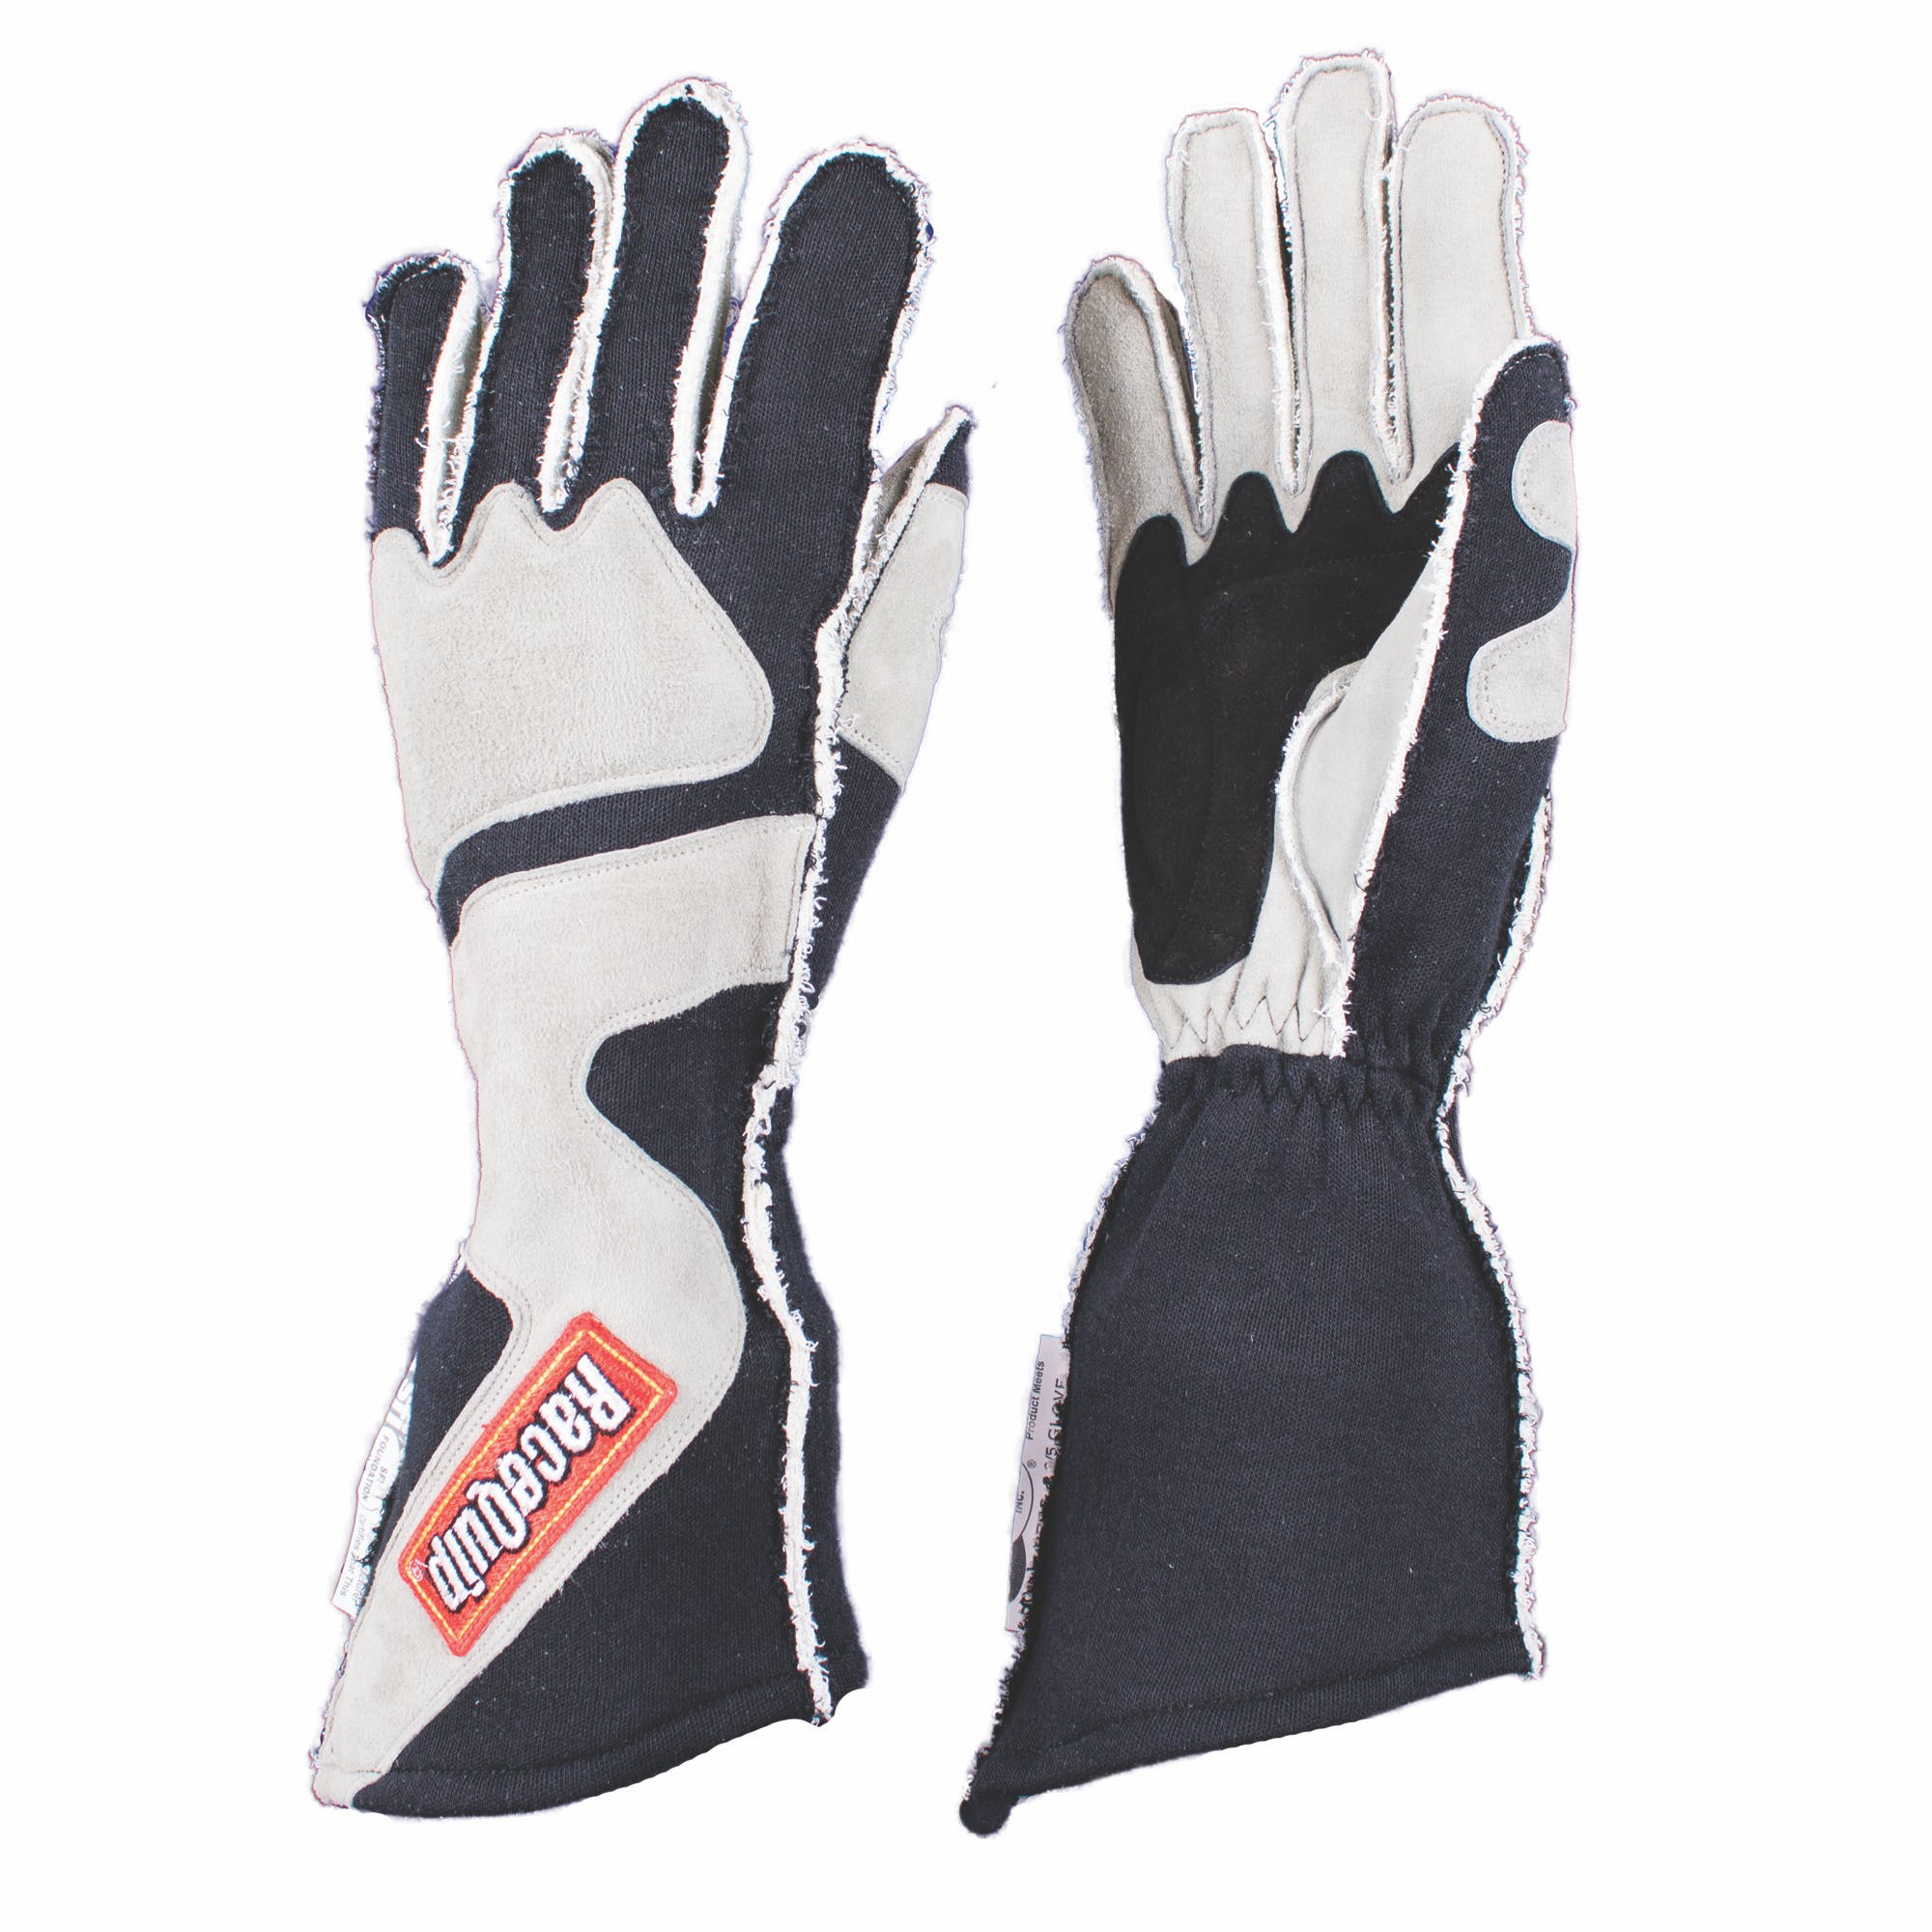 RaceQuip 359603 SFI-5 Out Seam Angle-Cut Gauntlet Racing Gloves (Gray/Black, Medium)